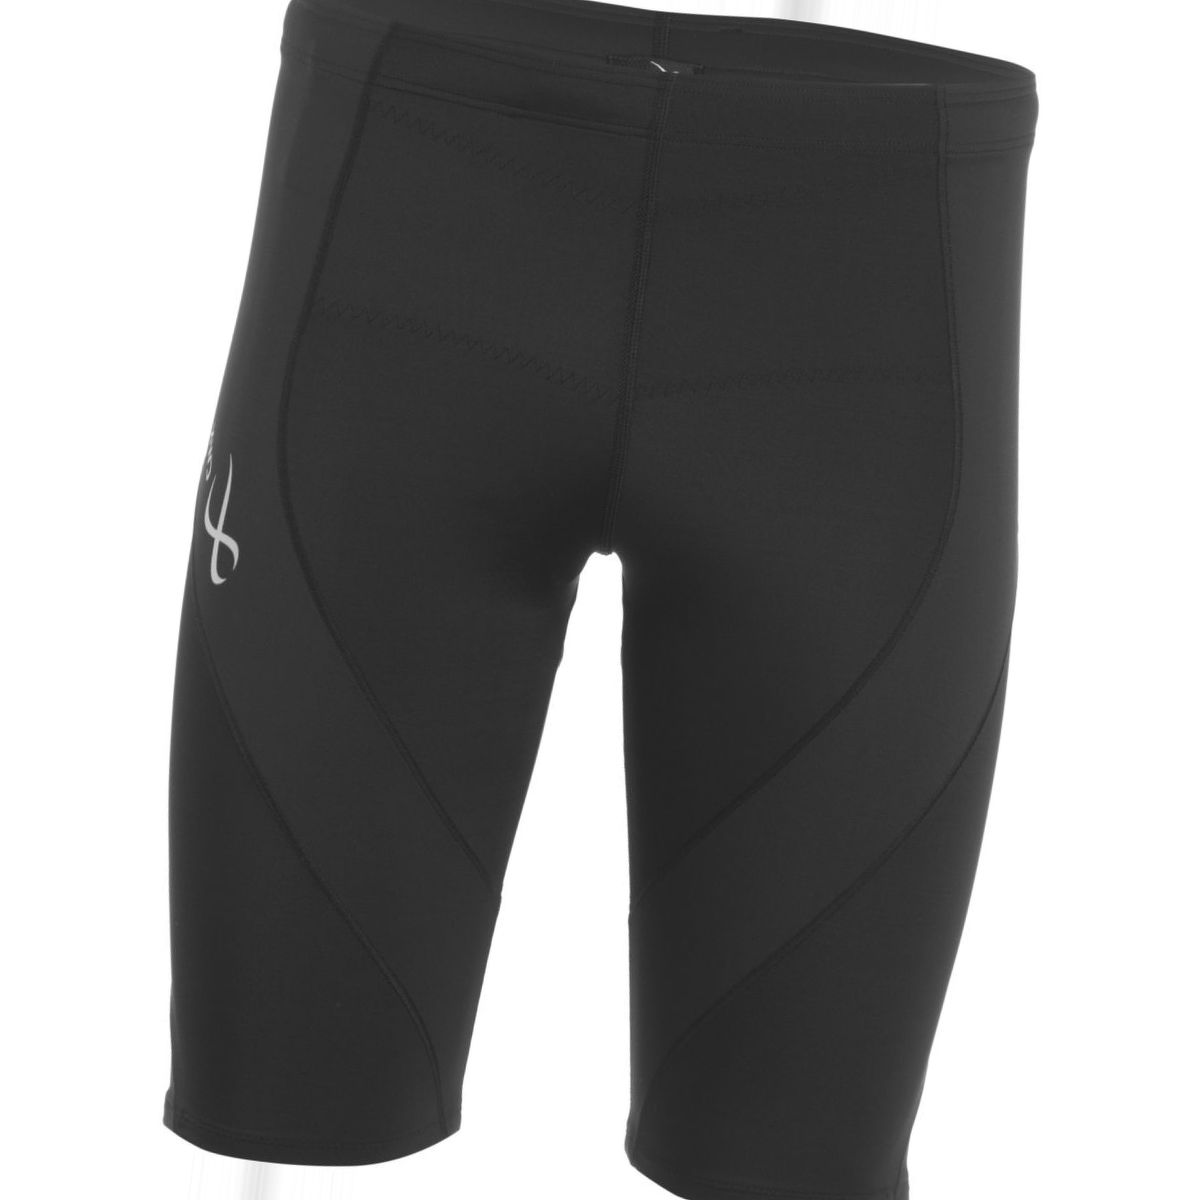 CW-X Endurance Pro Shorts - Men's